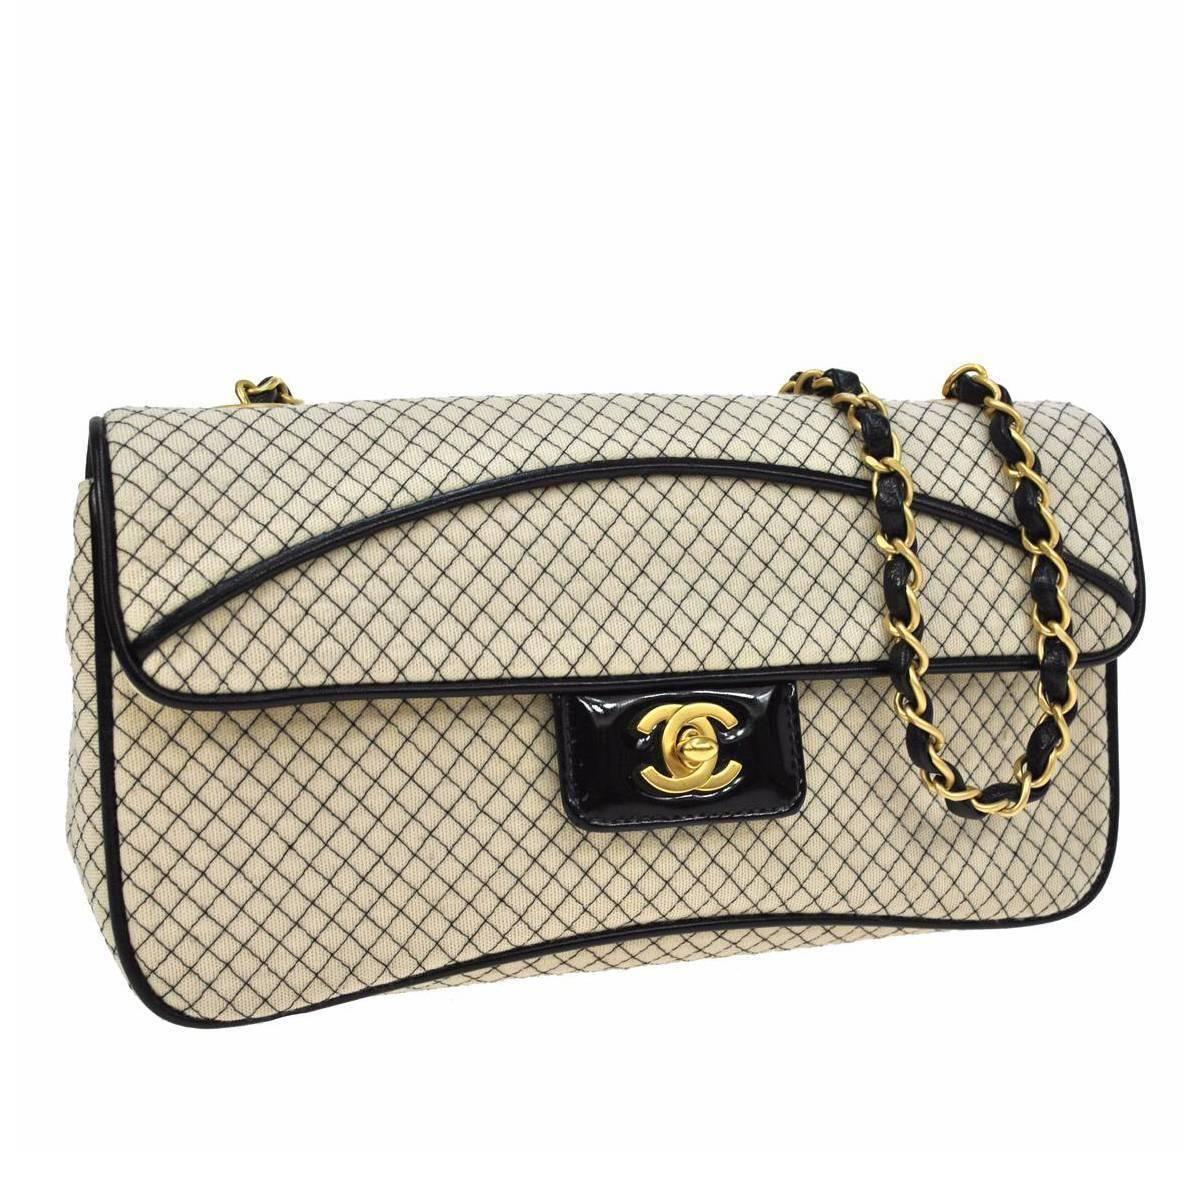 Chanel Black Plaid Patent Leather Gold Chain Evening Flap Shoulder Bag